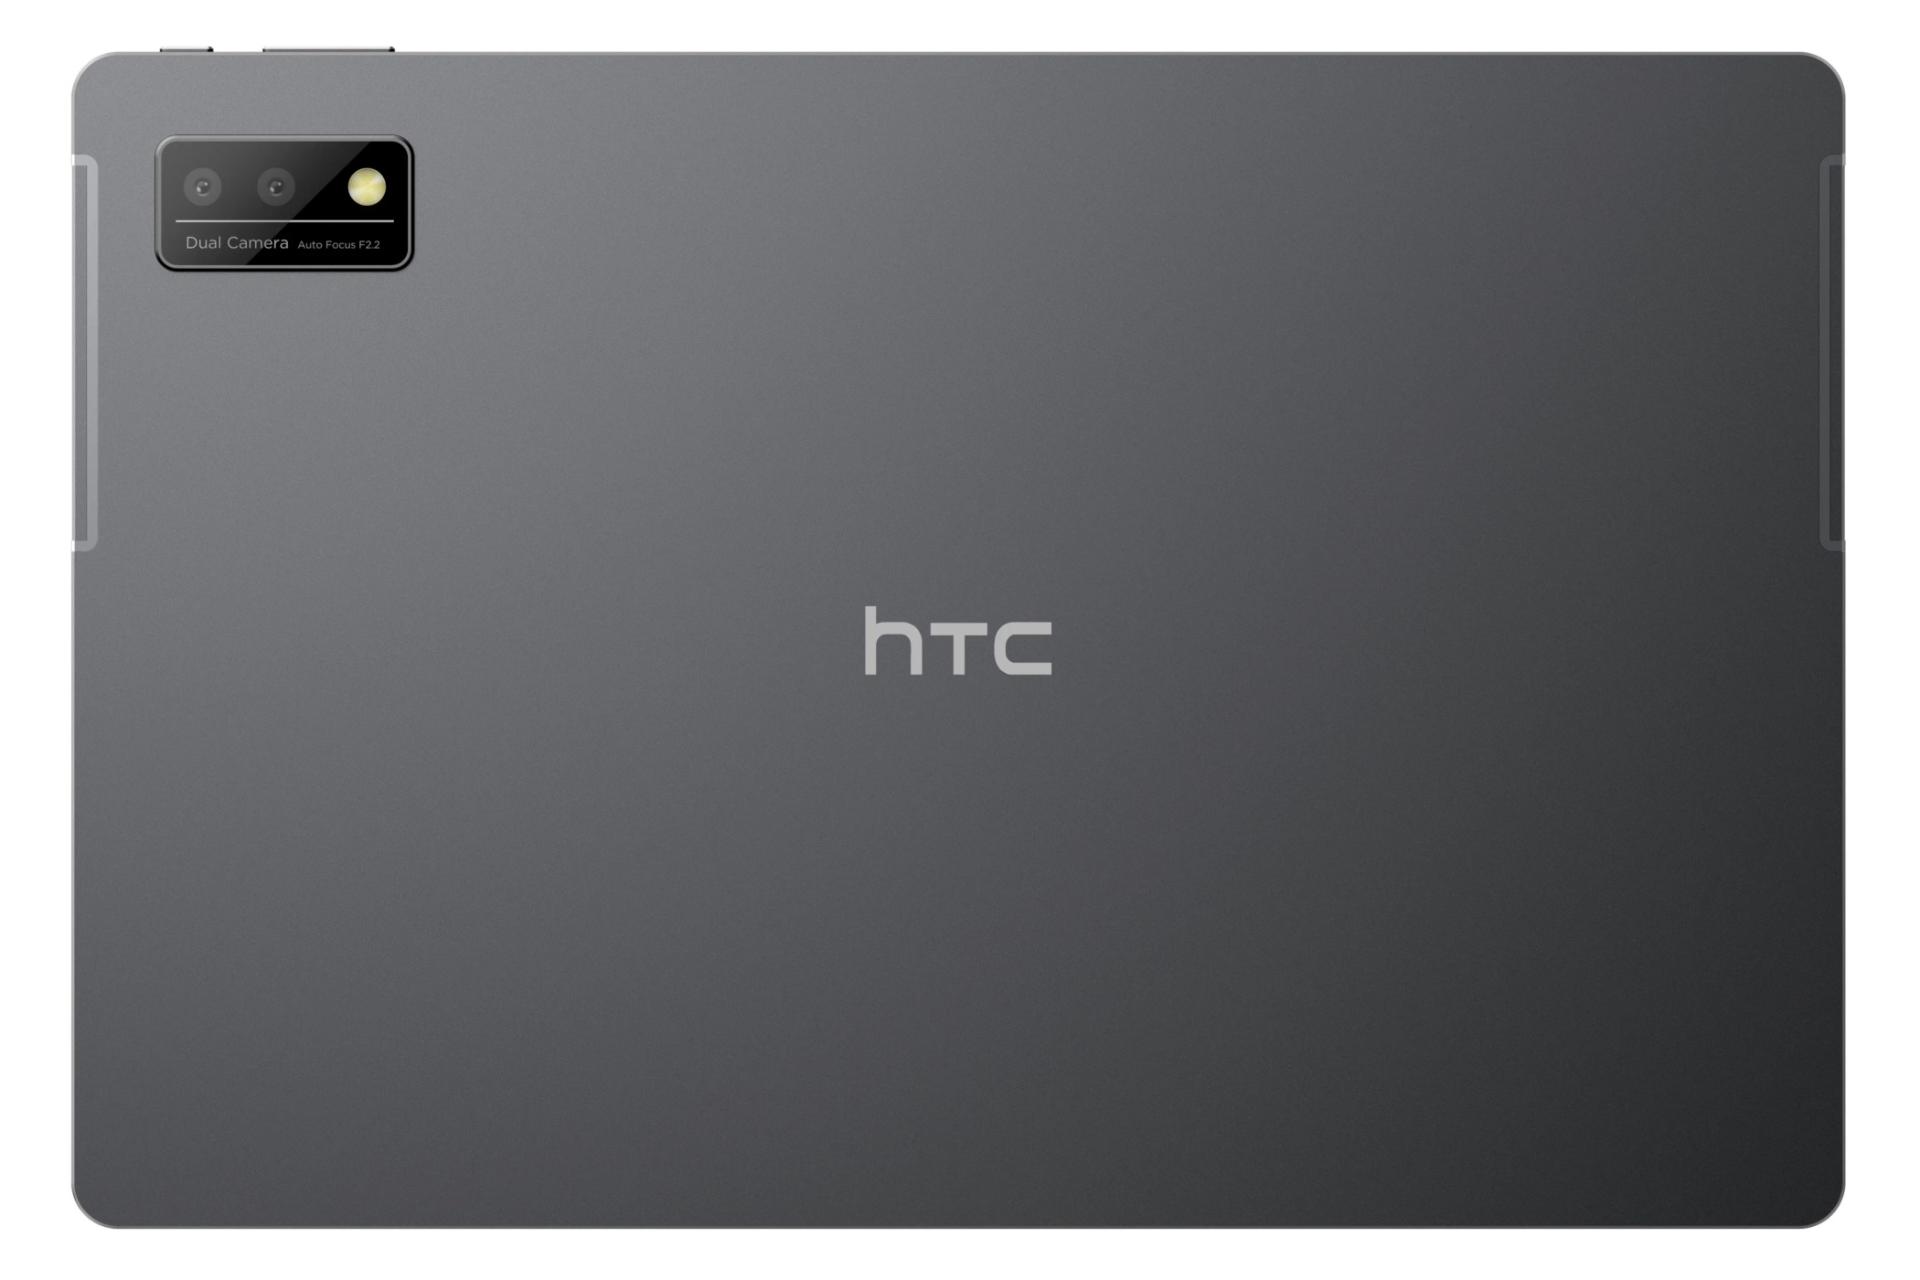 پنل پشت تبلت اچ تی سی HTC A101